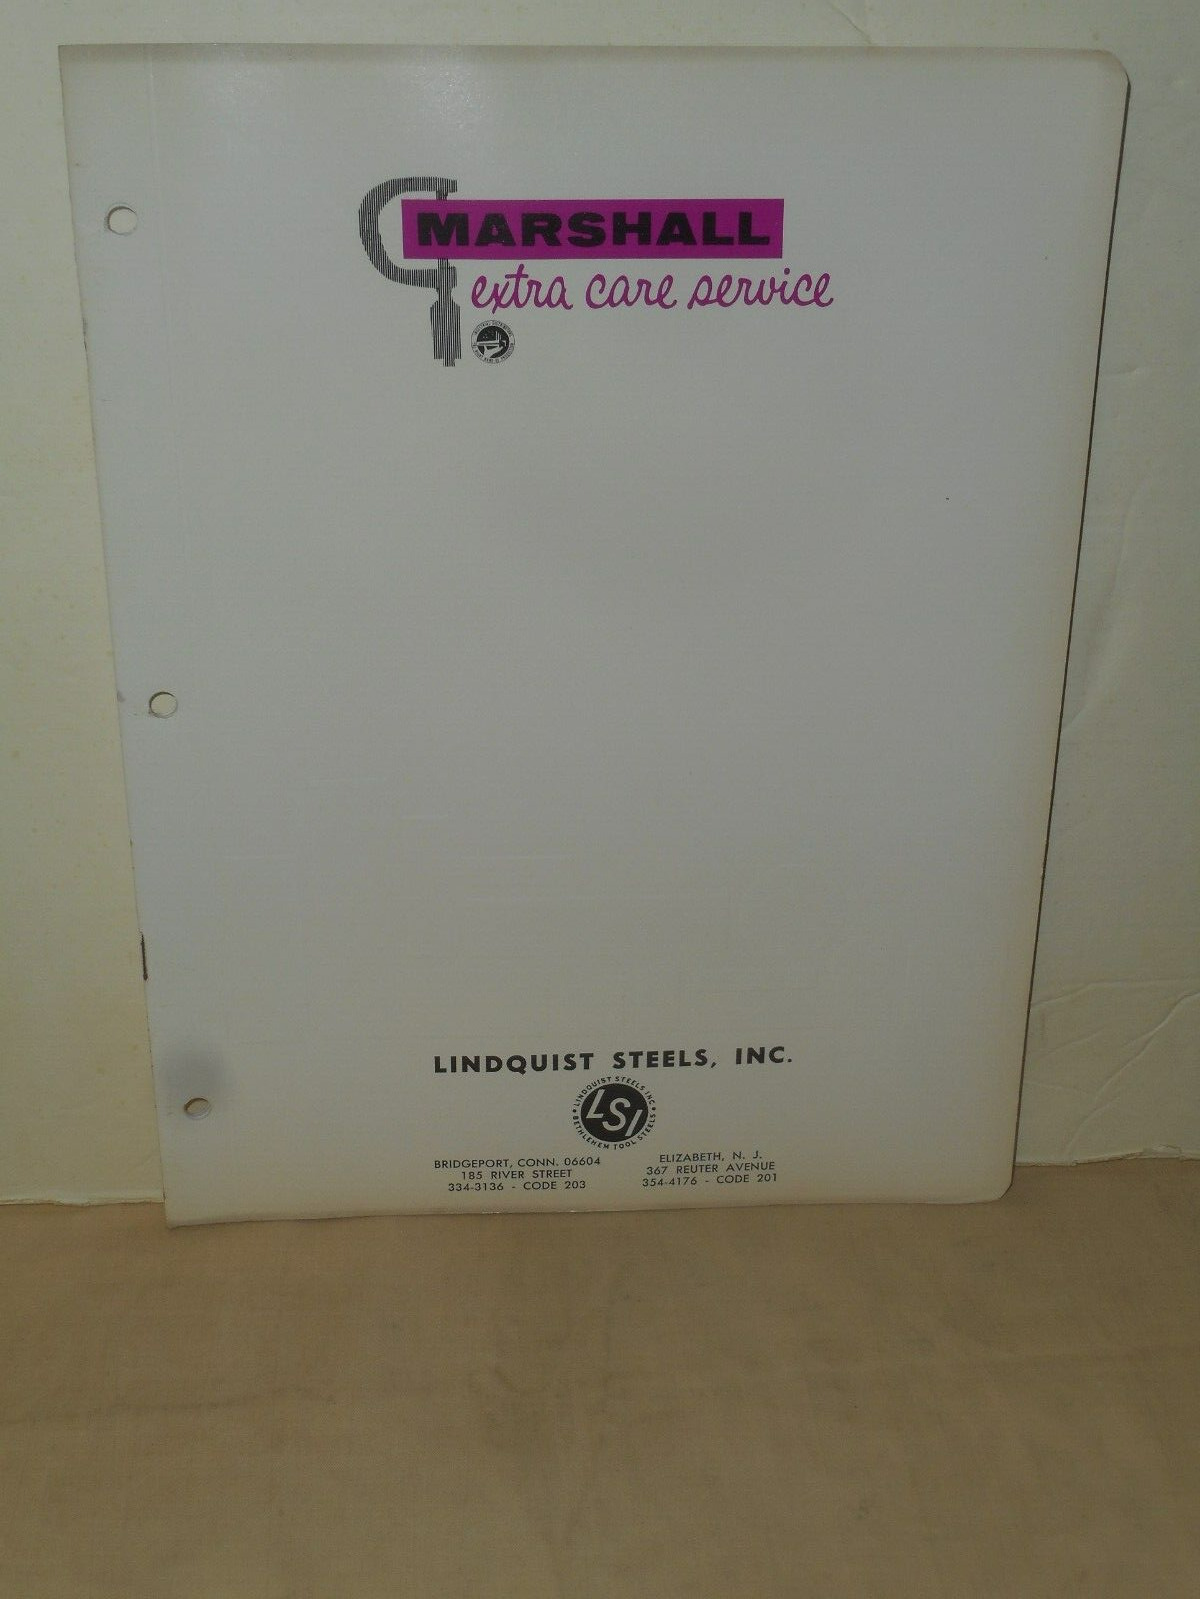 MARSHALL Steel Chicago IL Salesman Catalog & Data Specifications 1966 Handbook